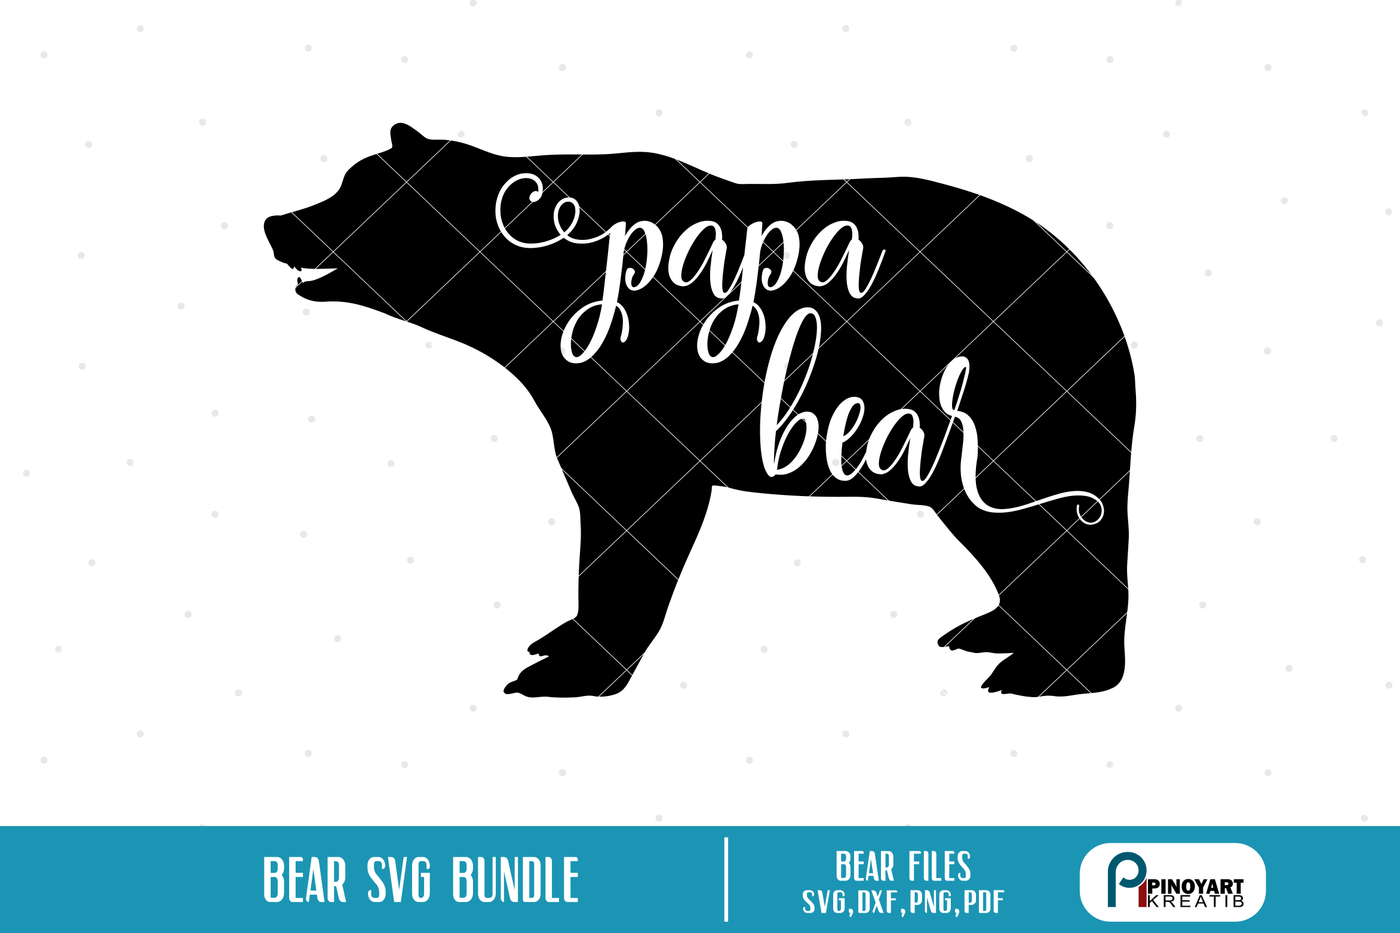 Download bear svg, bear svg file, bear silhouette svg, baby bear ...